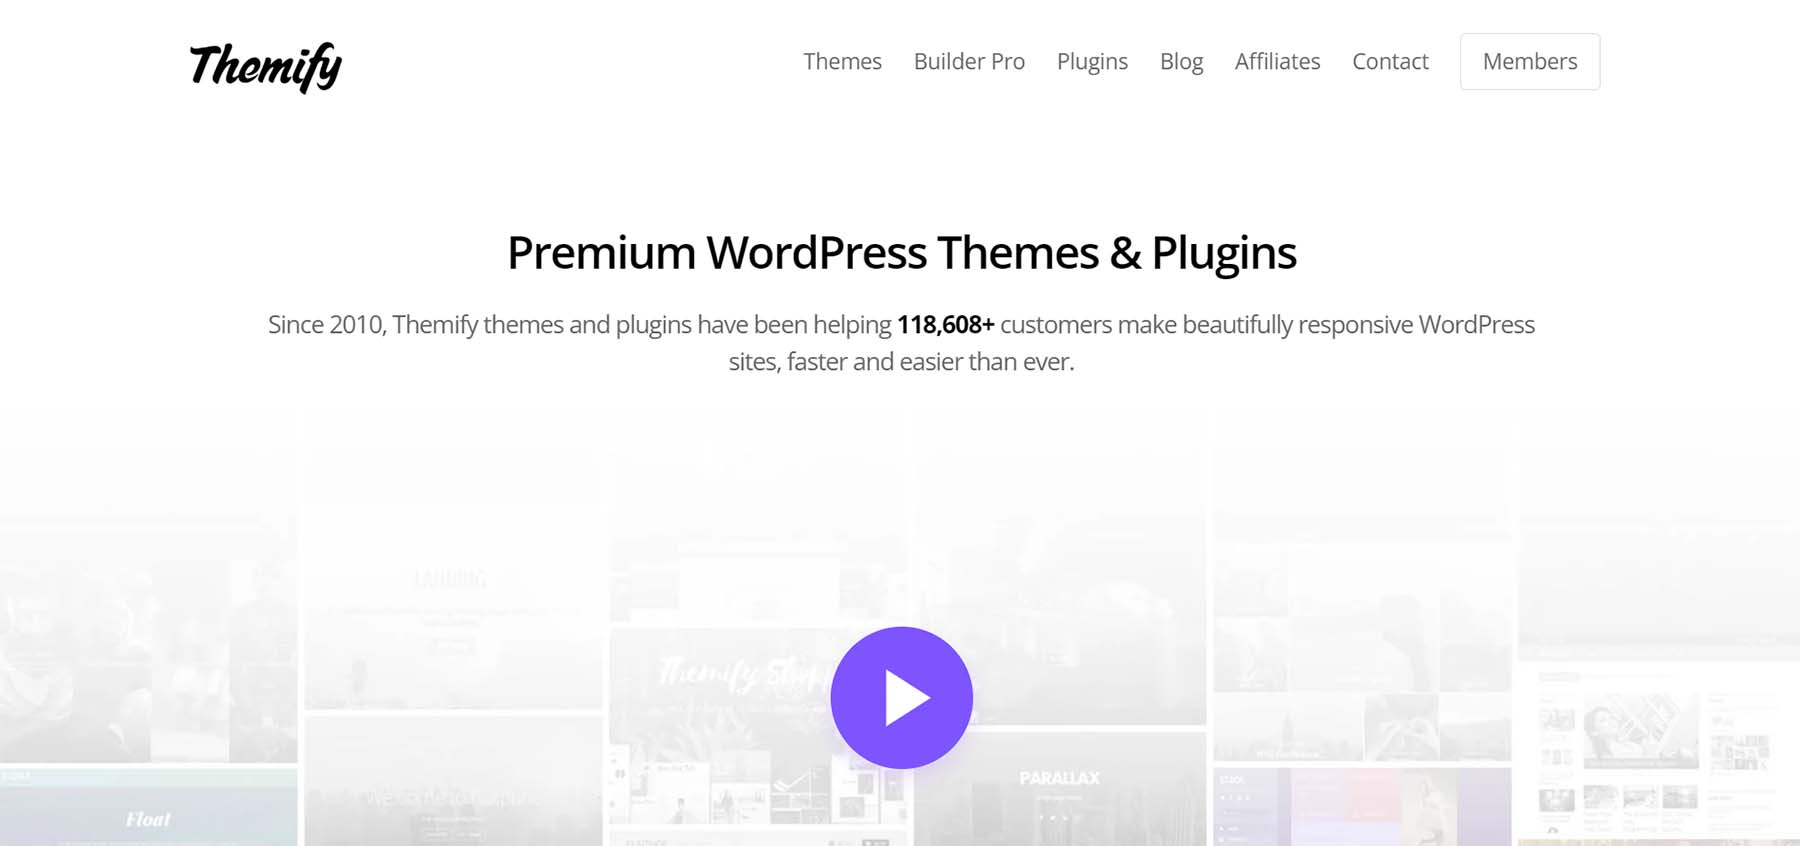 Themify Premium WordPress theme and plugins